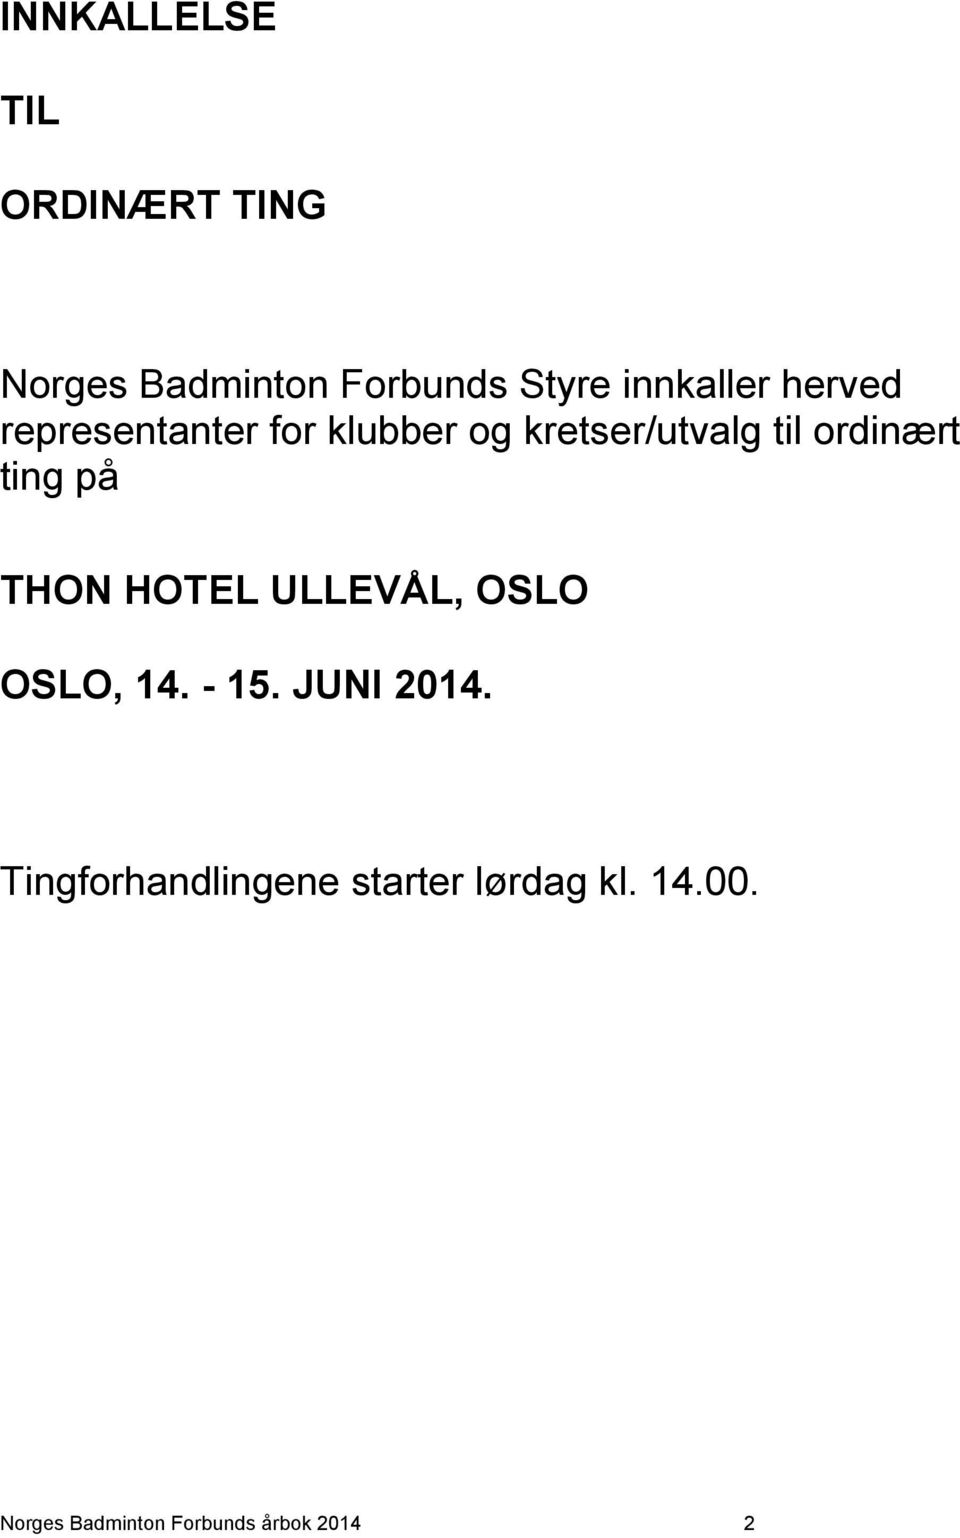 ordinært ting på THON HOTEL ULLEVÅL, OSLO OSLO, 14. - 15. JUNI 2014.